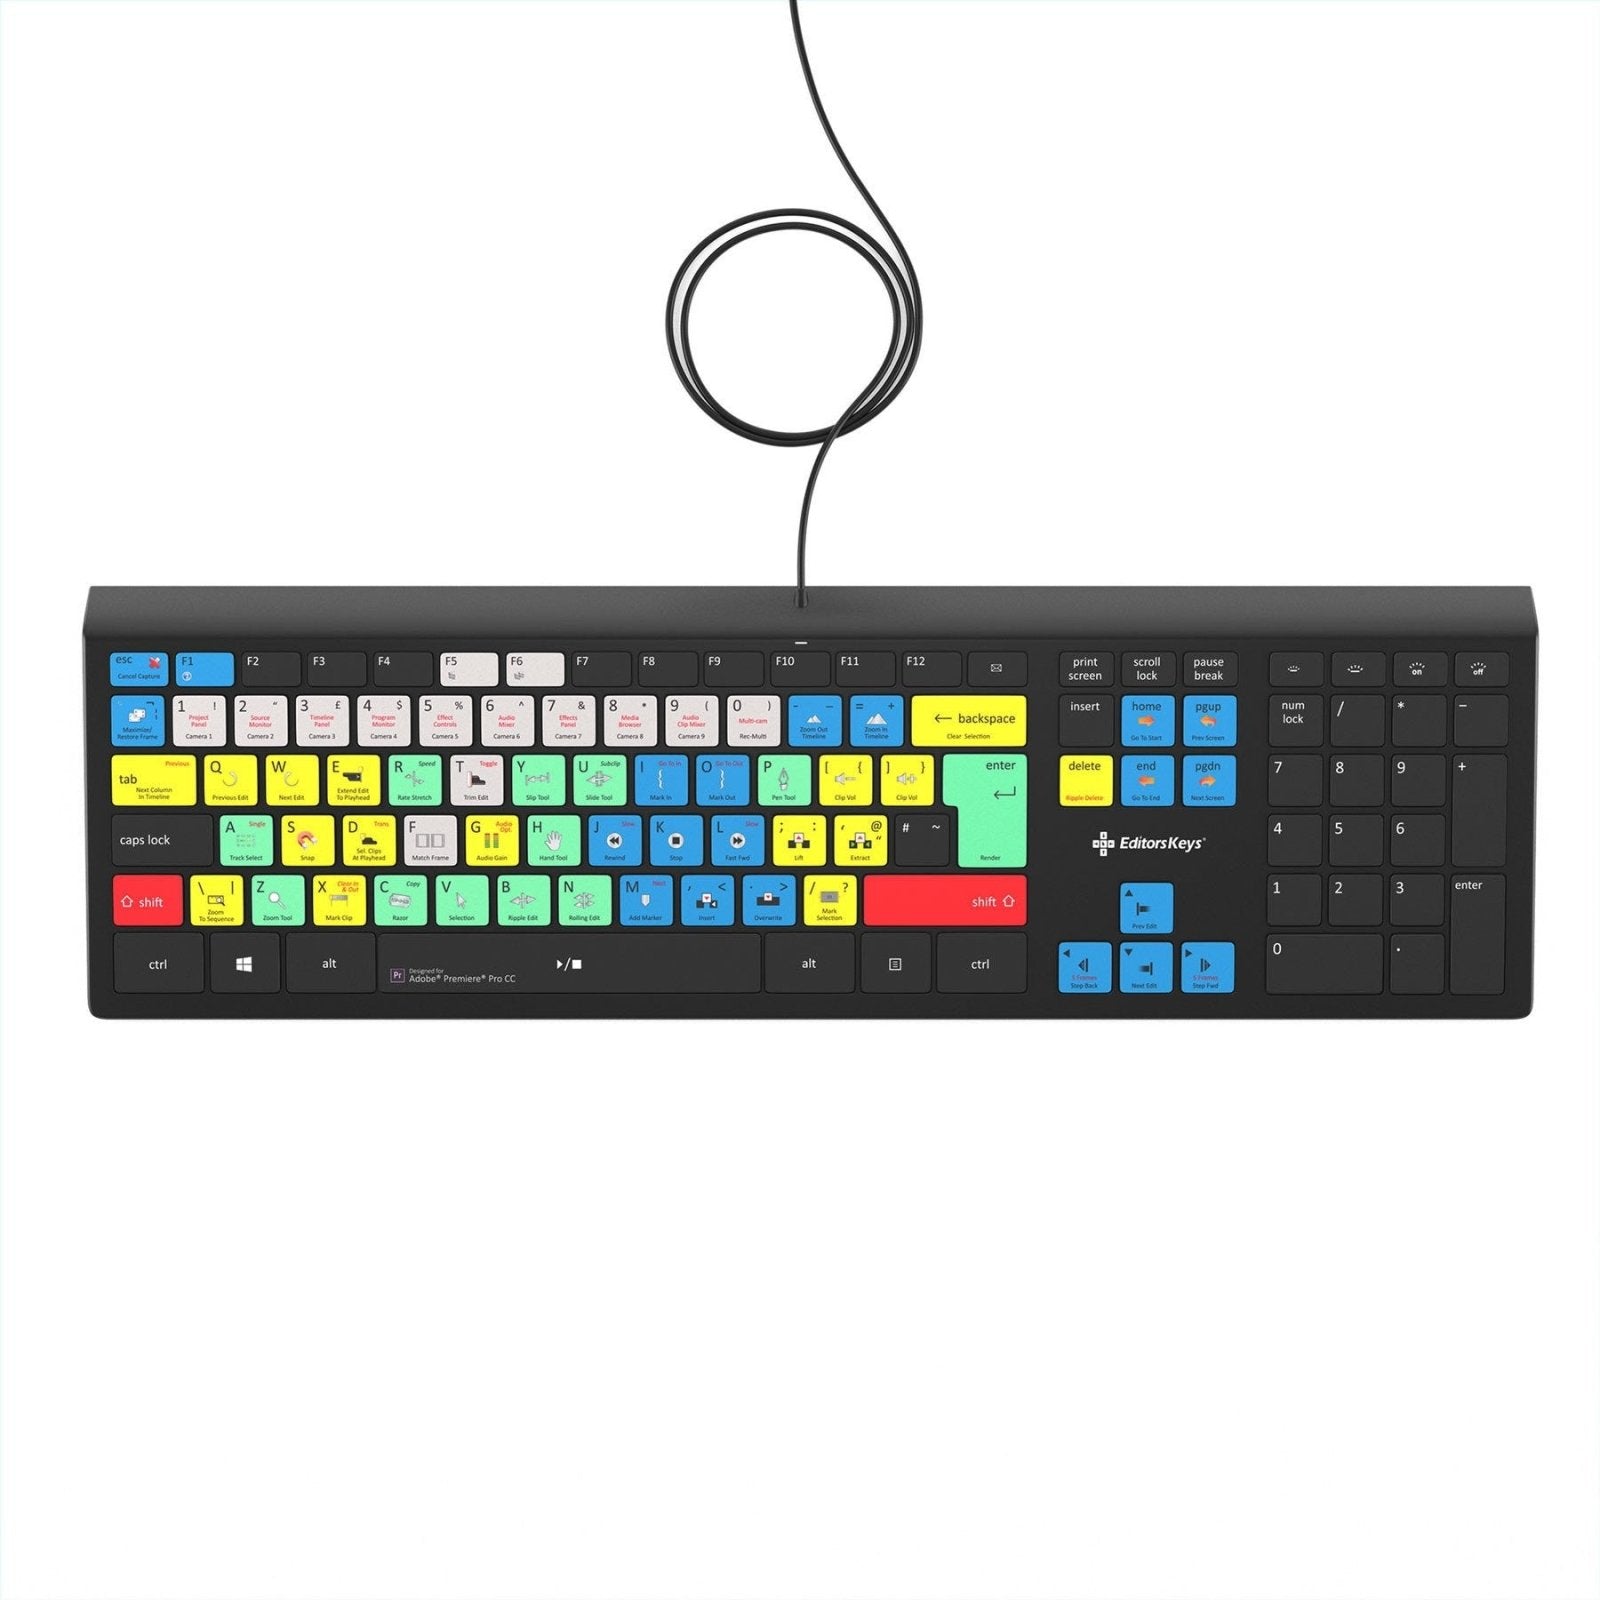 Adobe Premiere Pro CC Keyboard - Backlit - For Mac or PC - Editors Keys